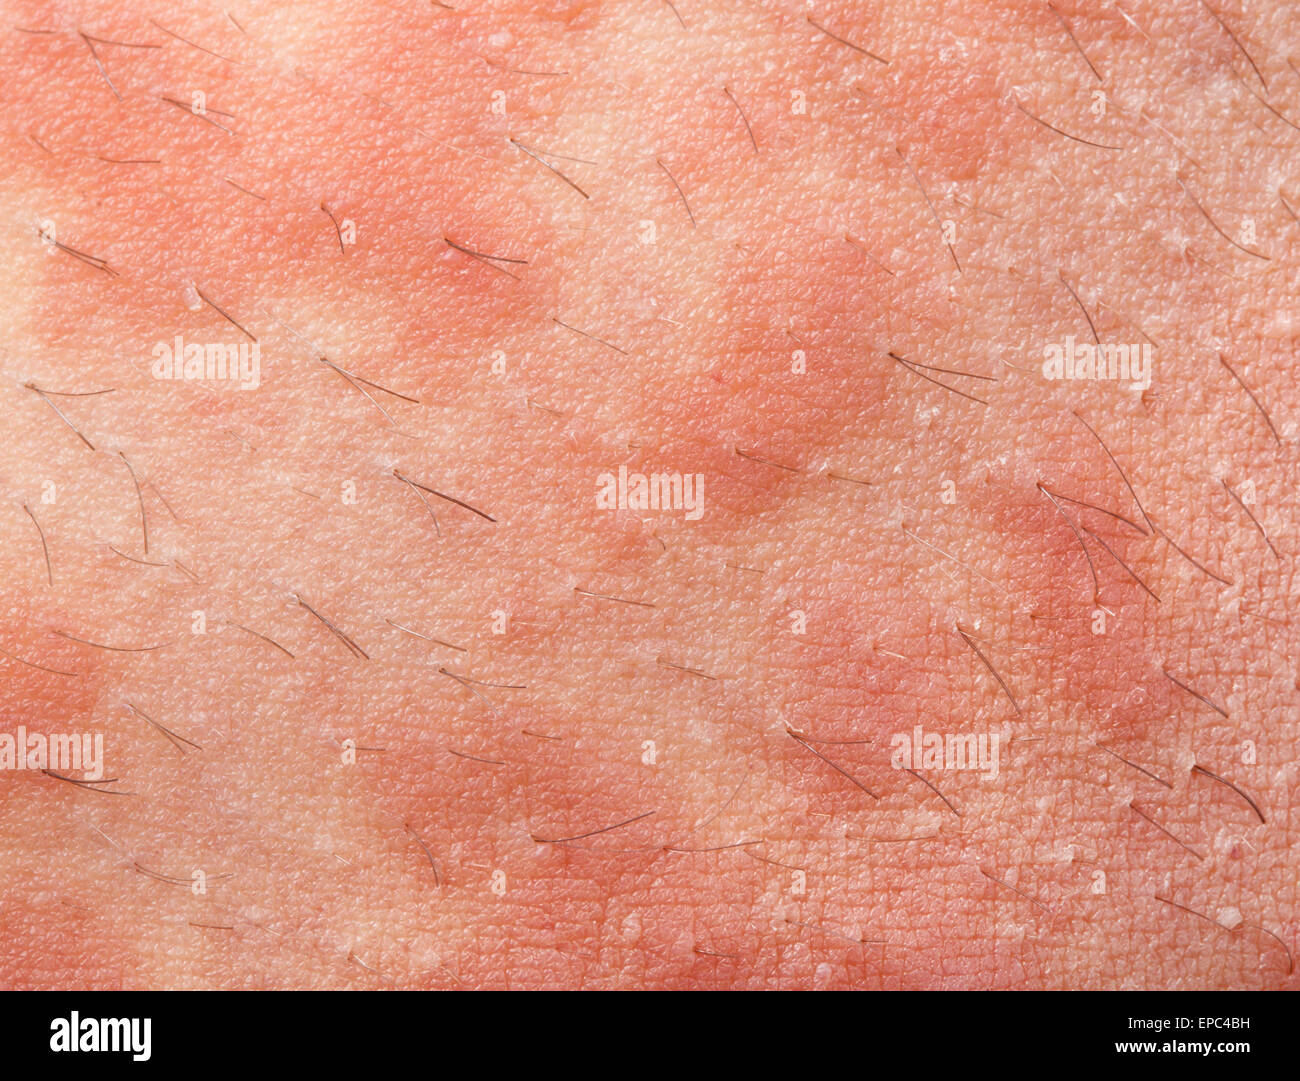 Eczema atopic dermatitis symptom skin texture Stock Photo